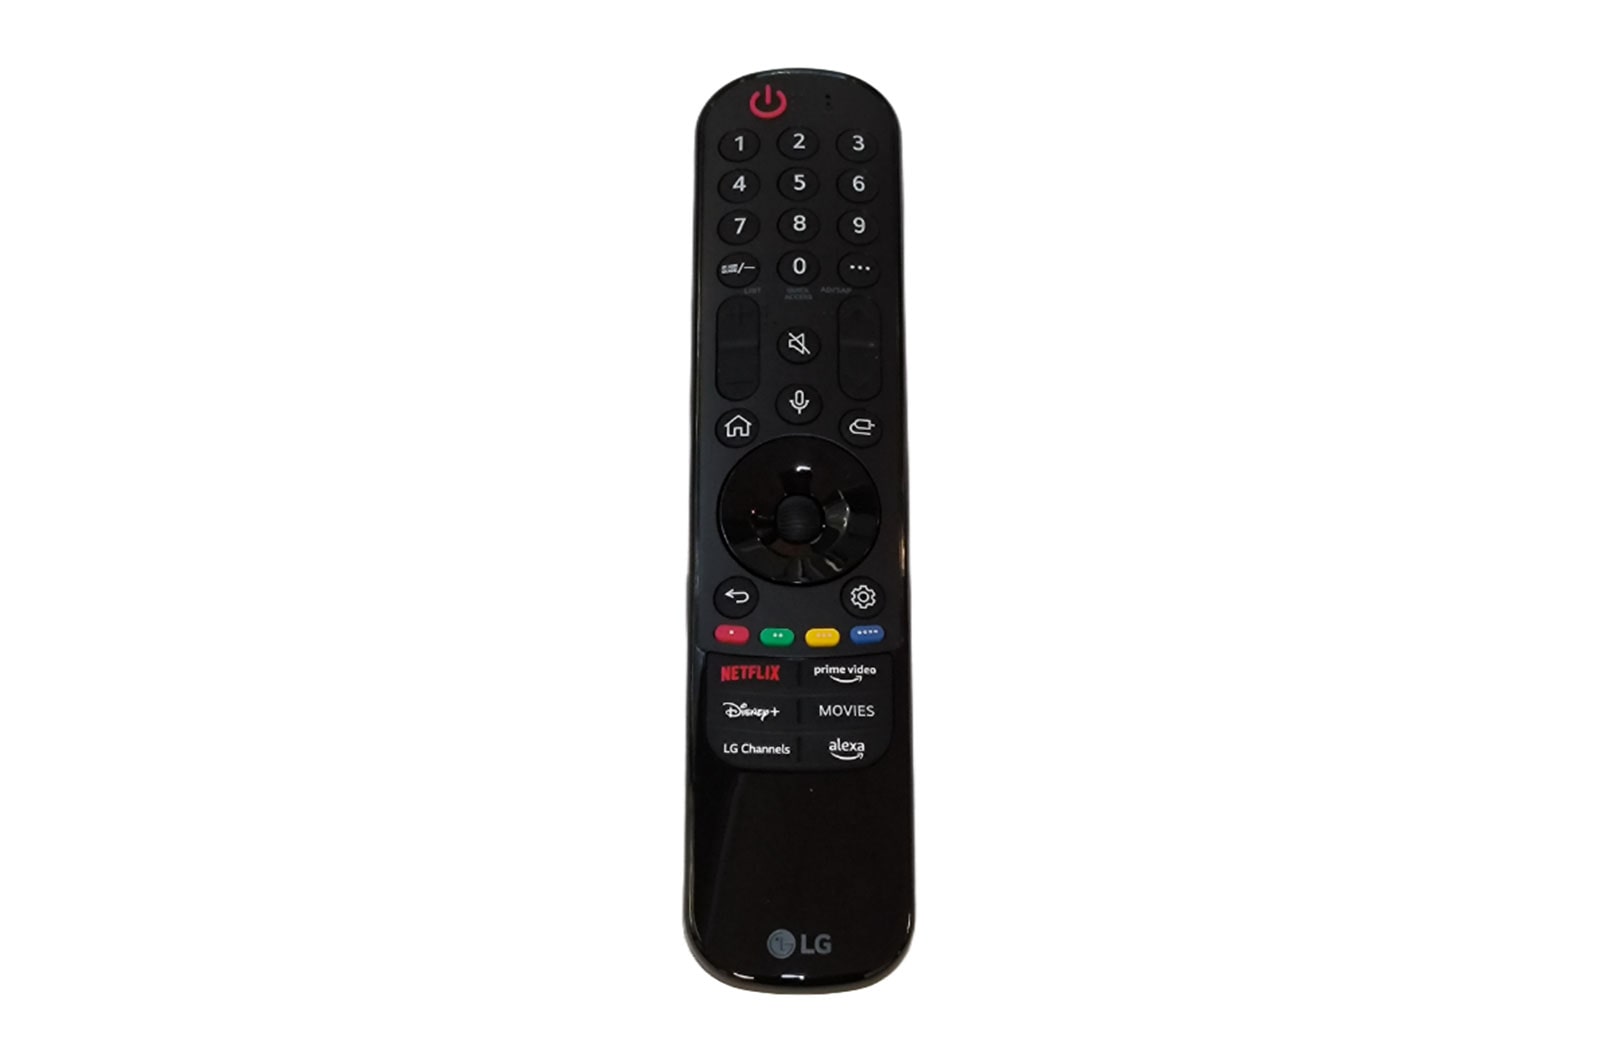 Nuevo Magic Remote MR23GA Reemplazo para LG Magic Remote 2023 Control  remoto universal para LG Smart TV Remoto (sin función de voz, sin función  de